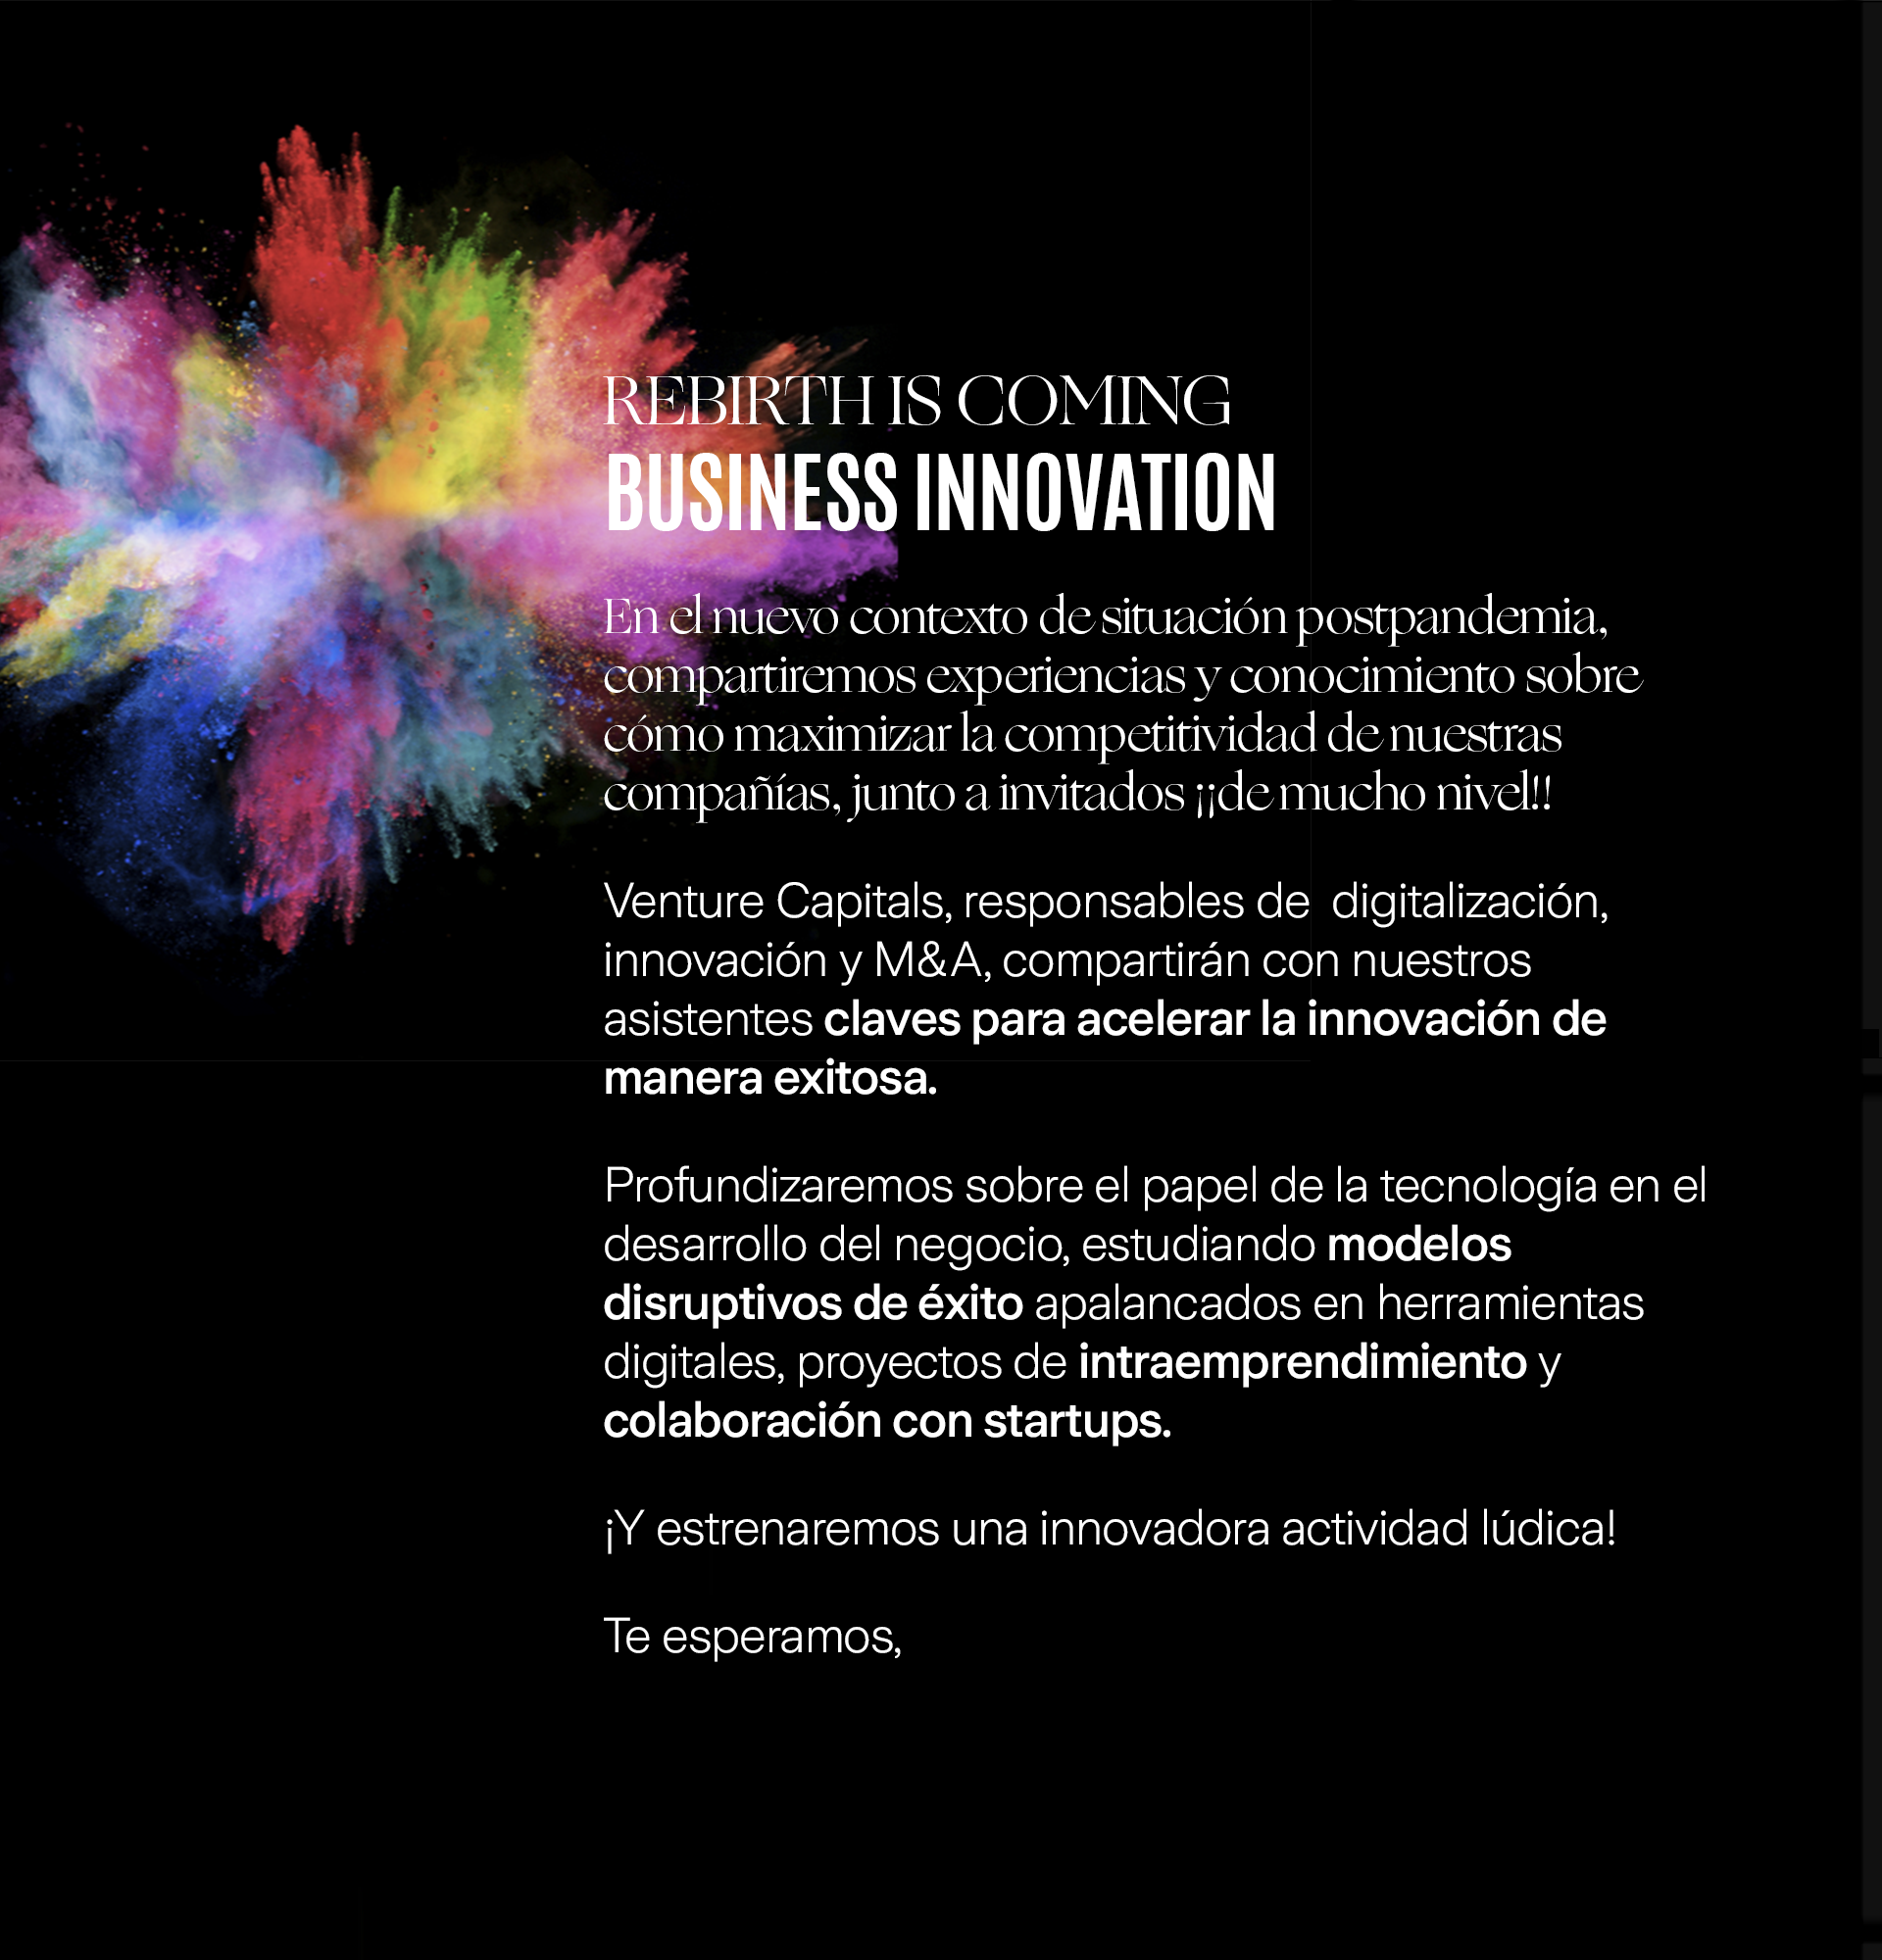 business innovation texto-2